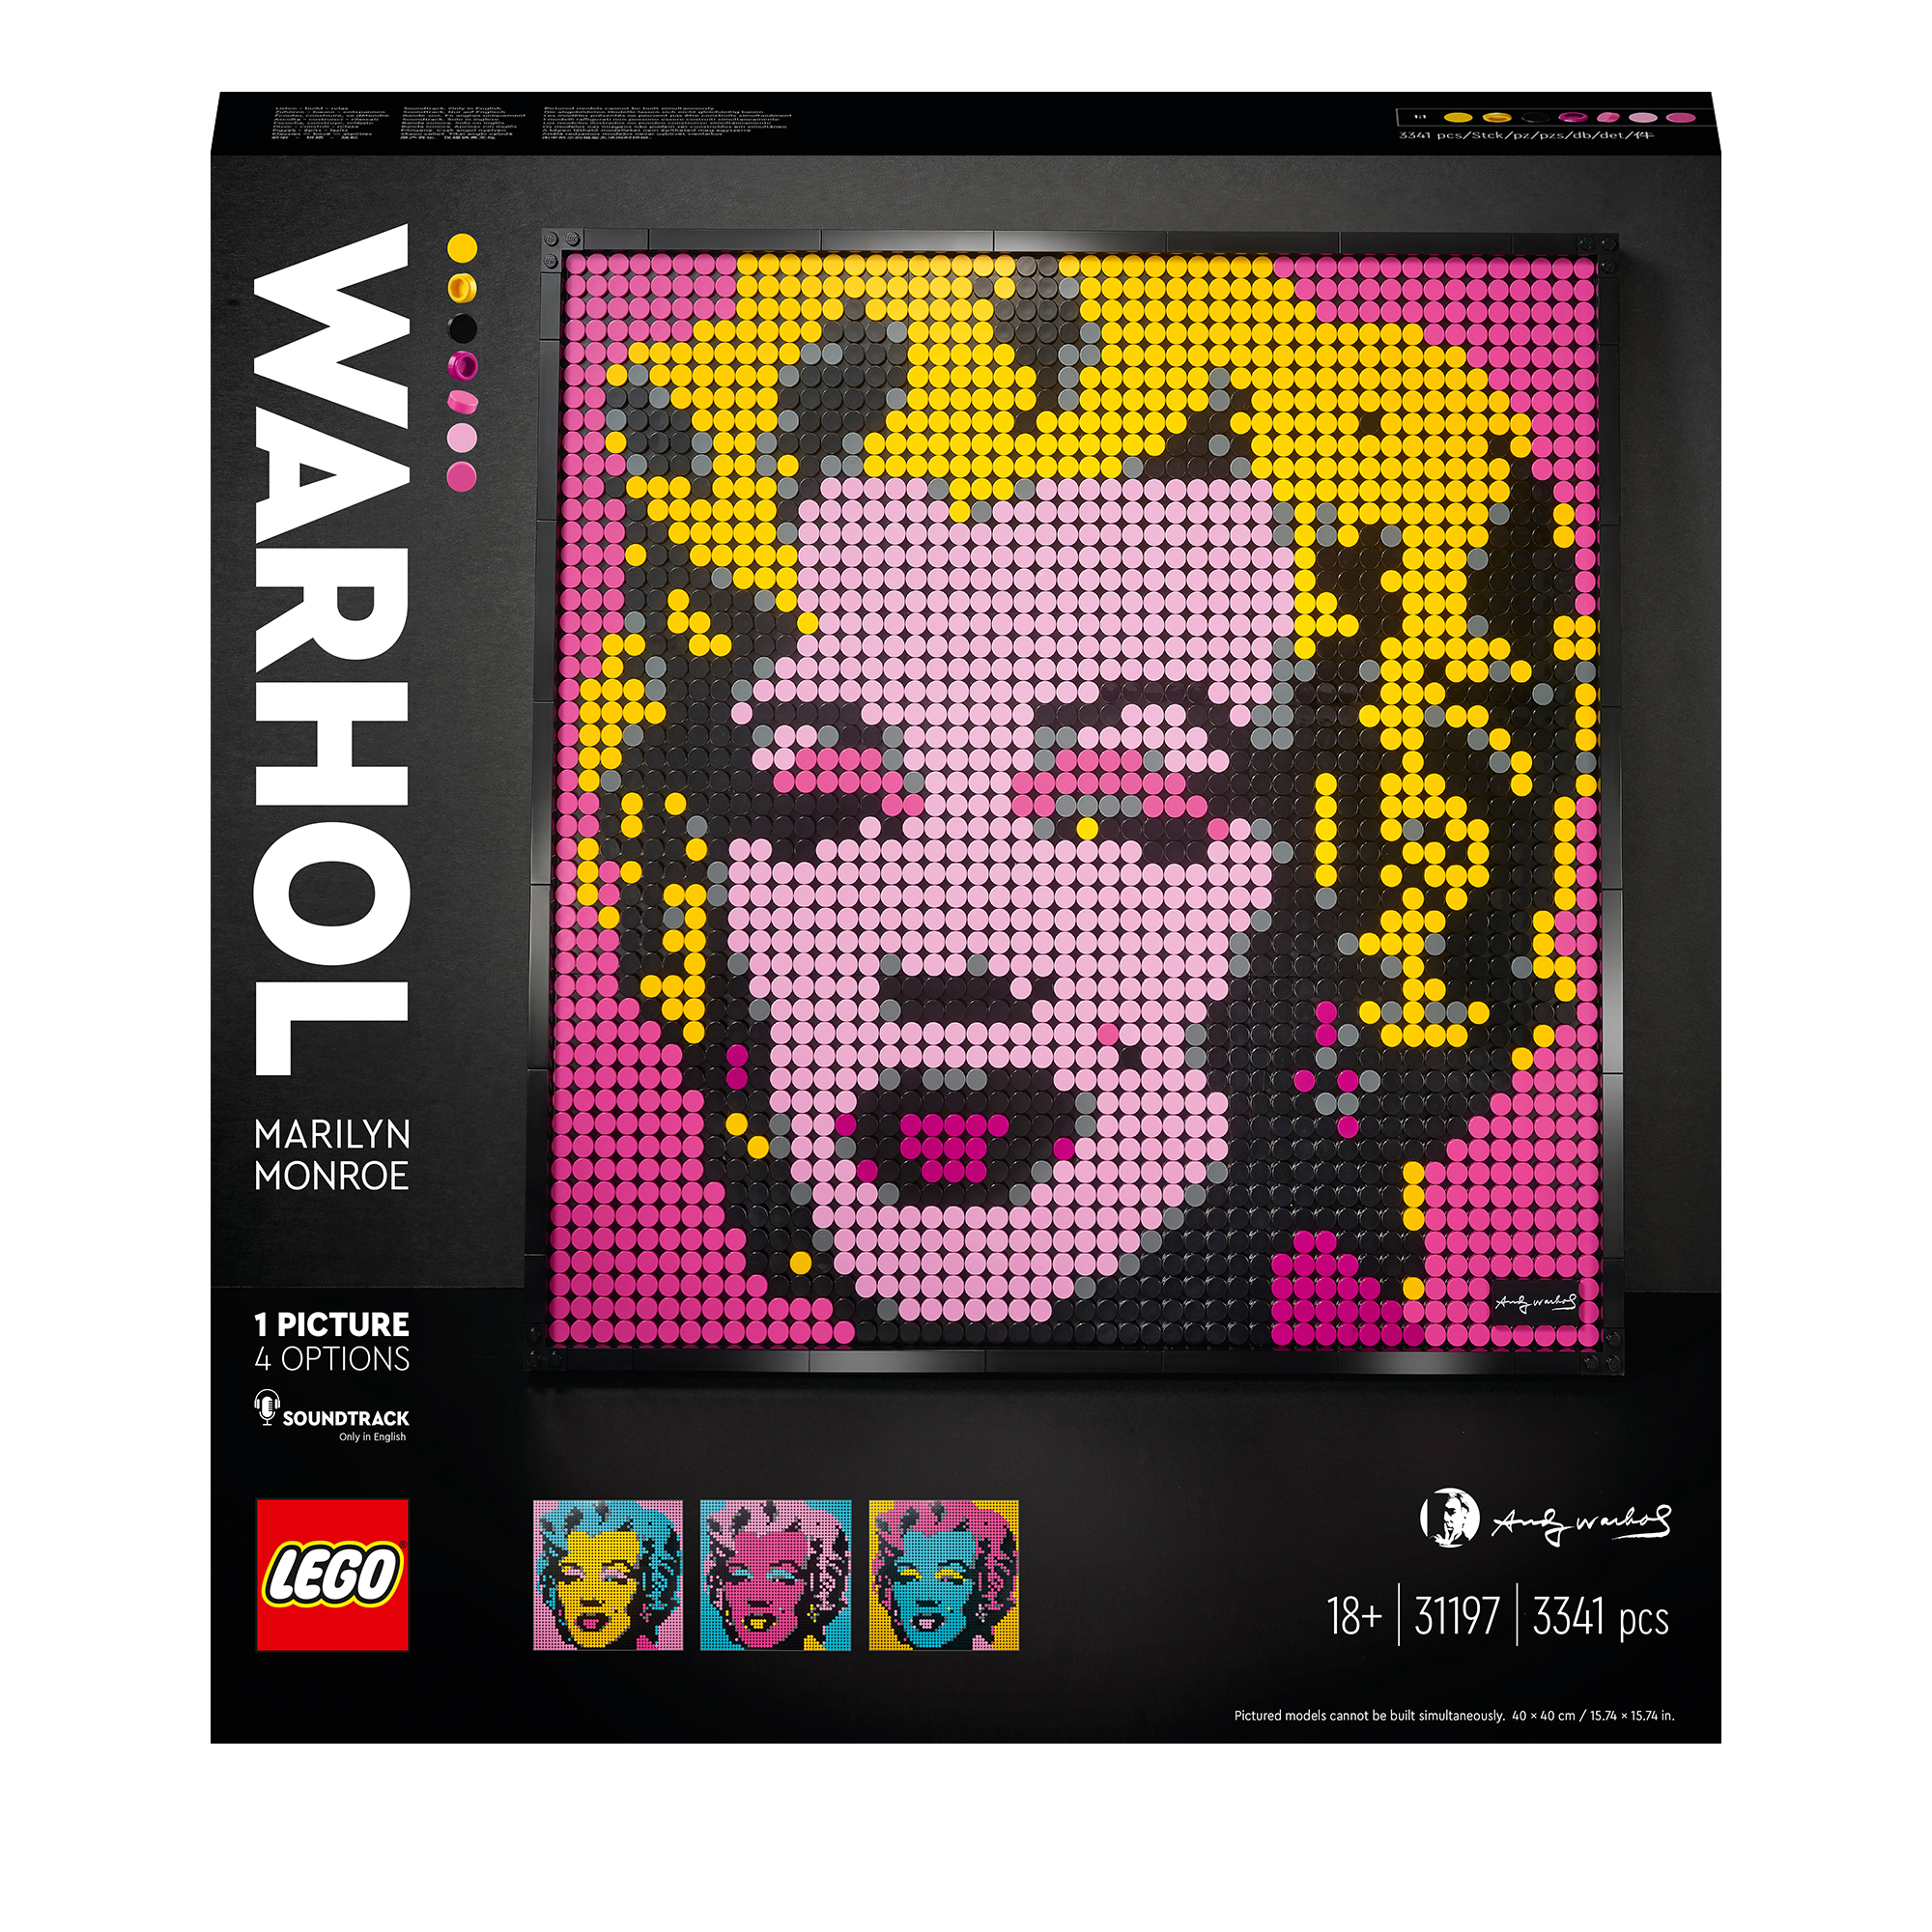 LEGO ART Andy Warhol's Marilyn Monroe